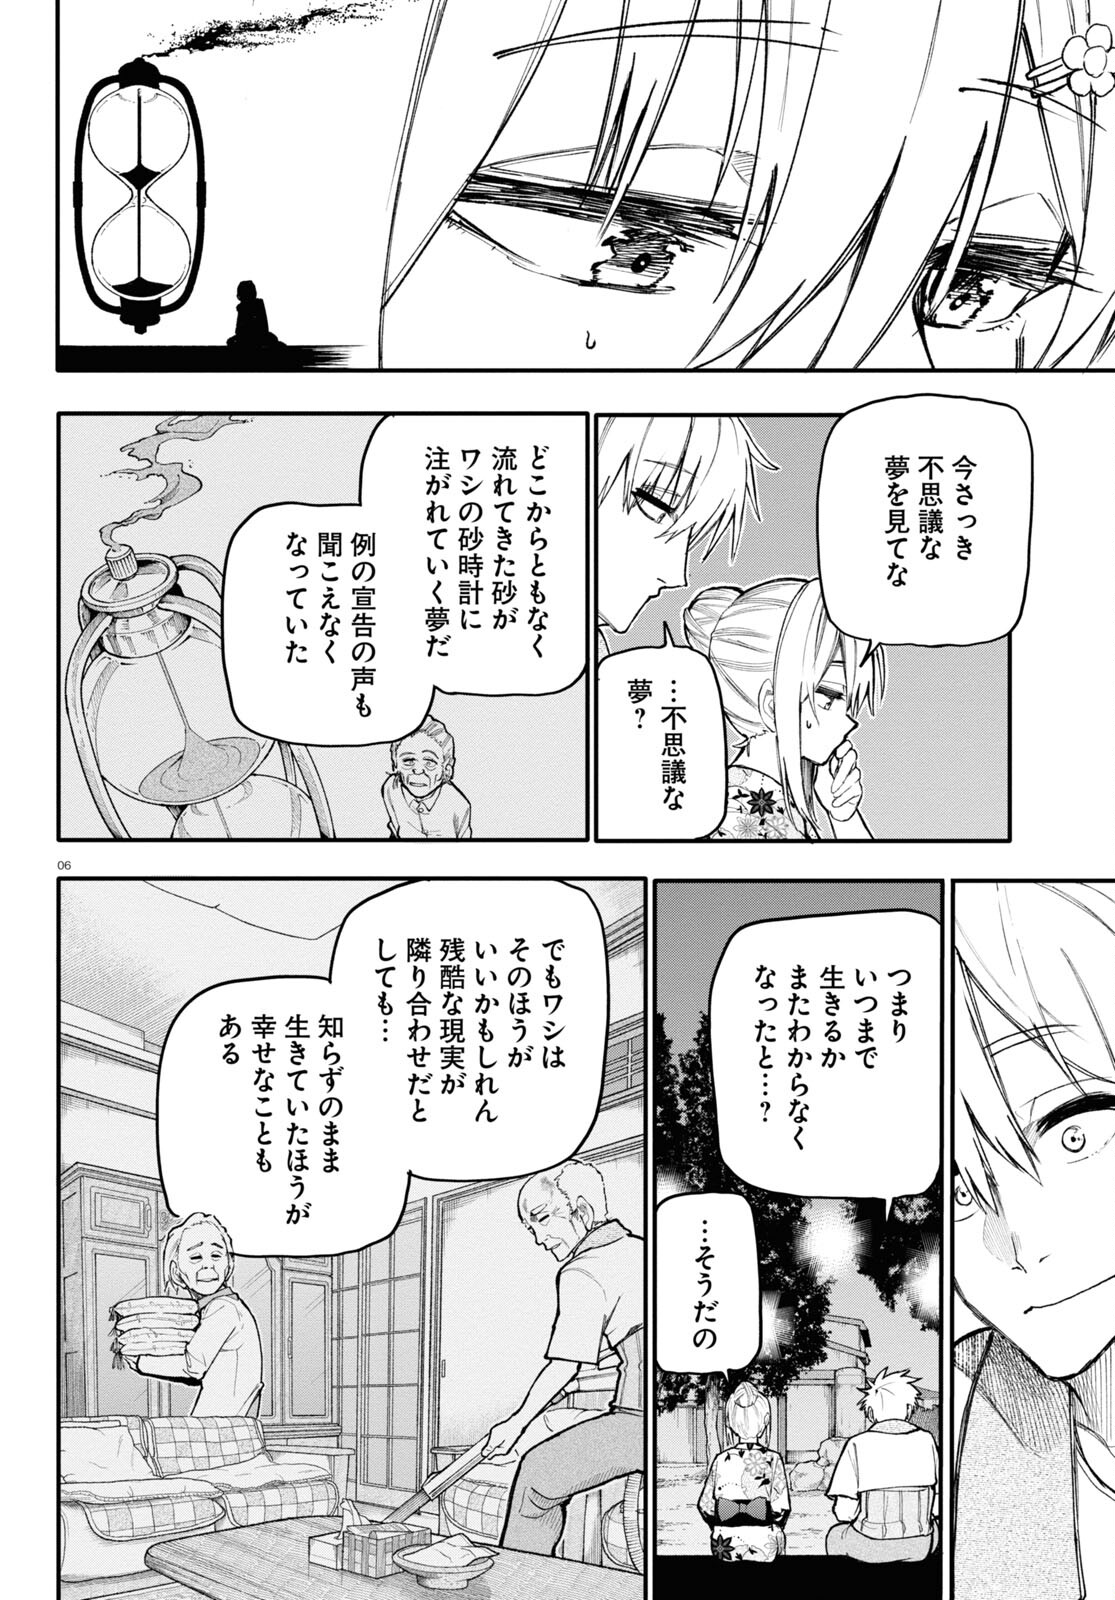 Ojii-san to Obaa-san ga Wakigaetta Hanashi - Chapter 149 - Page 2